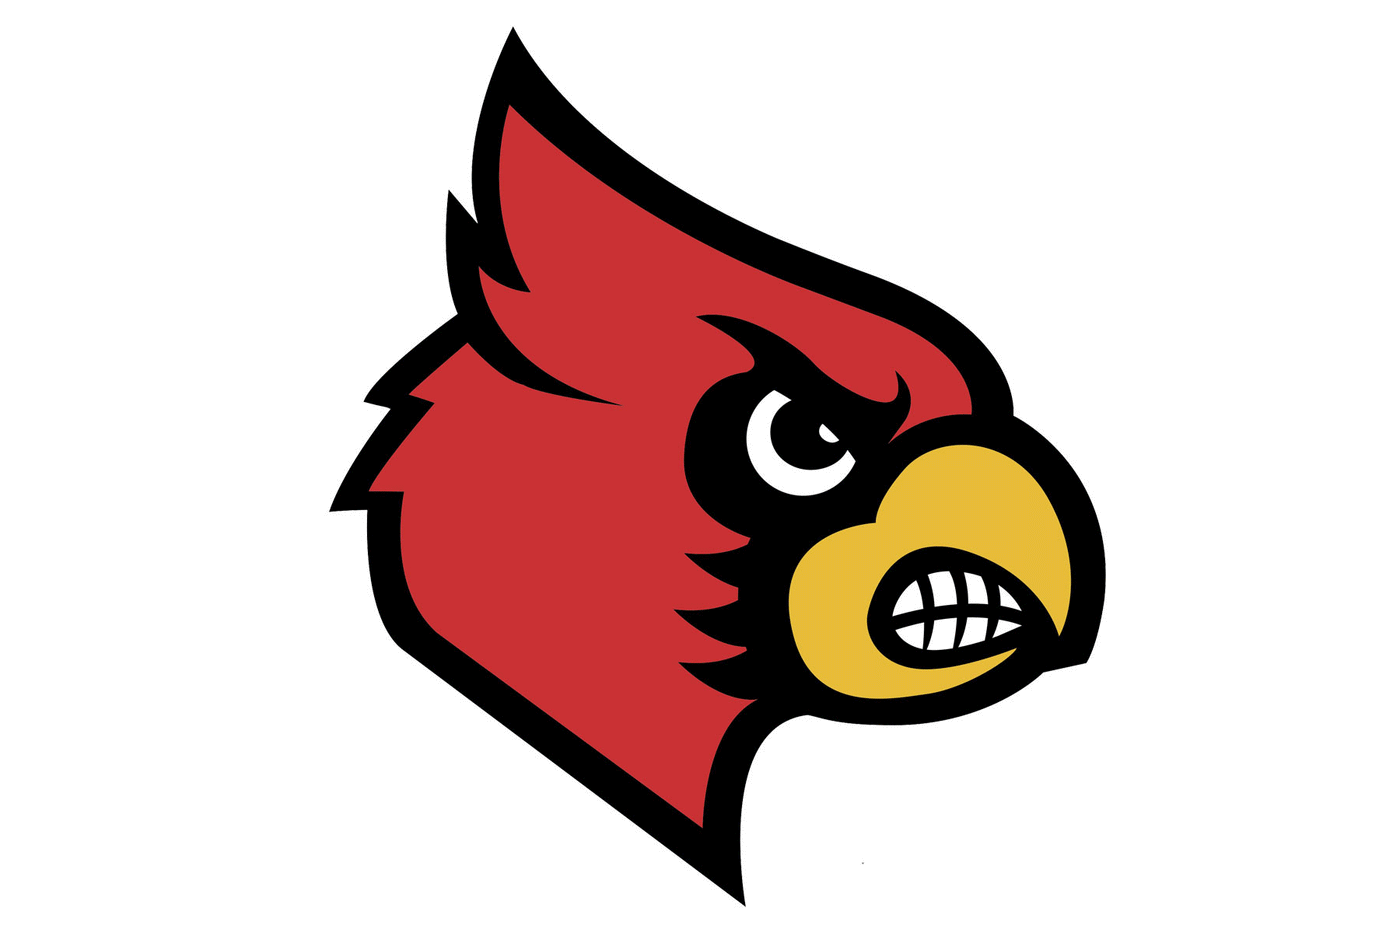 Louisville Cardinals Football Helmet